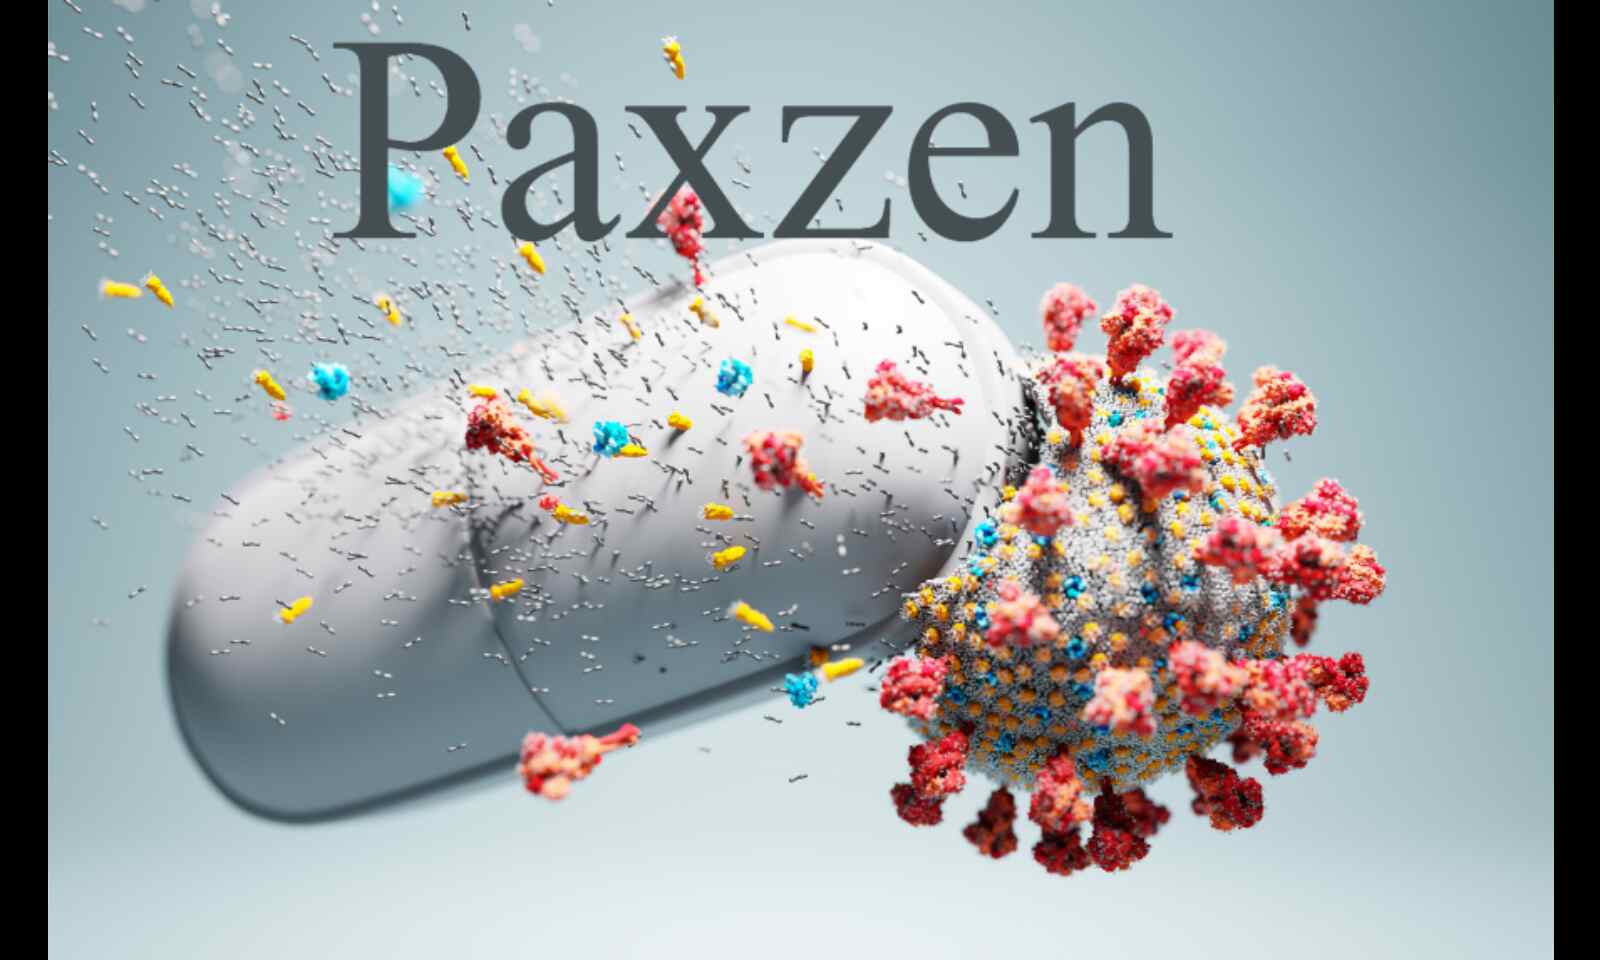 Zenara Pharma launches the first generic of Paxlovid for COVID-19 in India